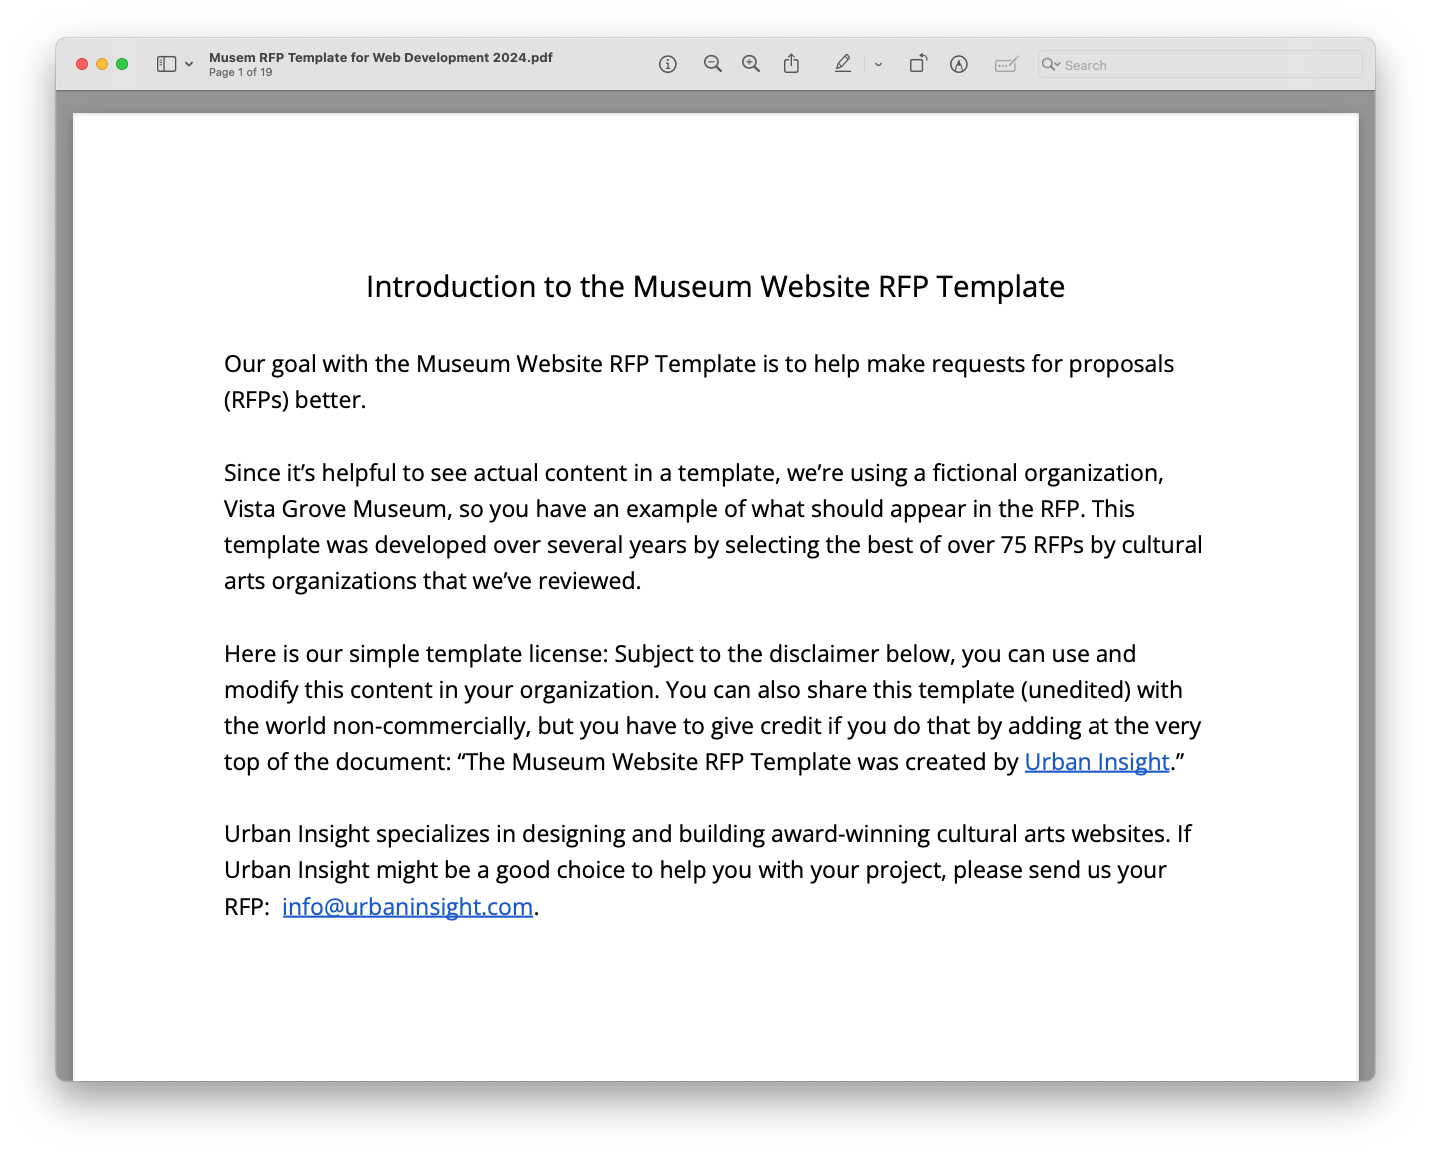 Museum RFP Template for Web Development (2024) | Urban Insight